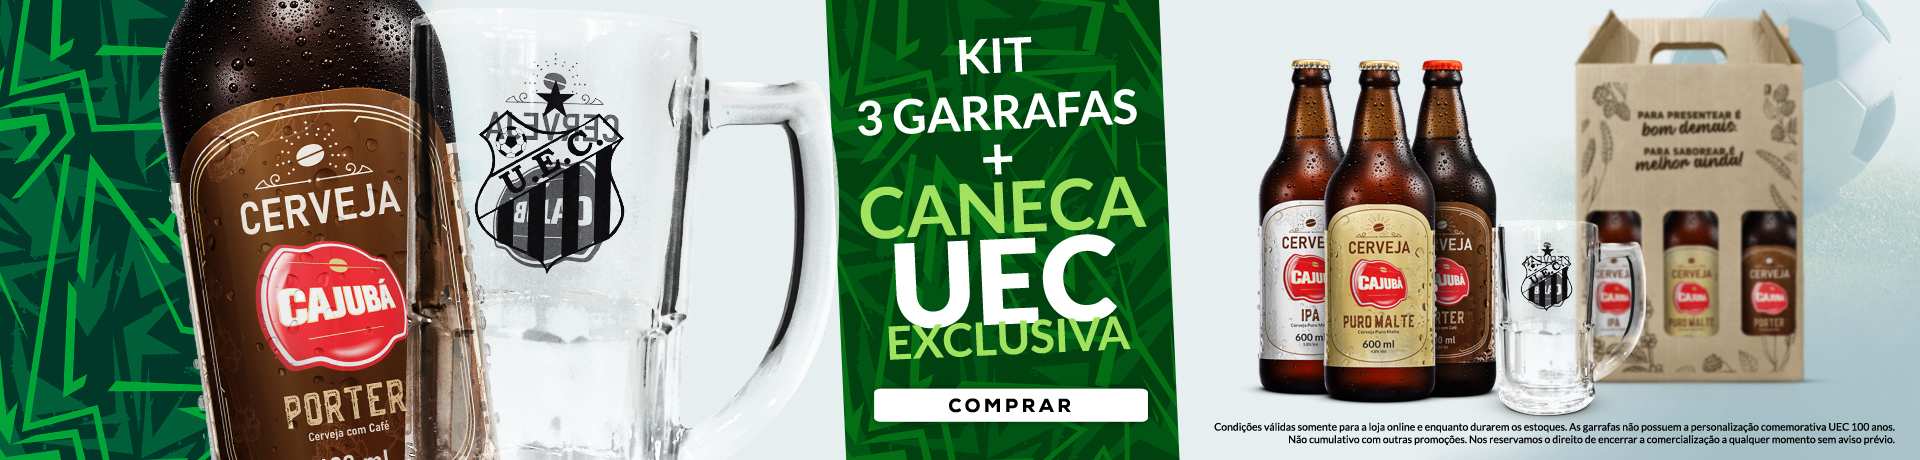 Kit Garrafa UEC